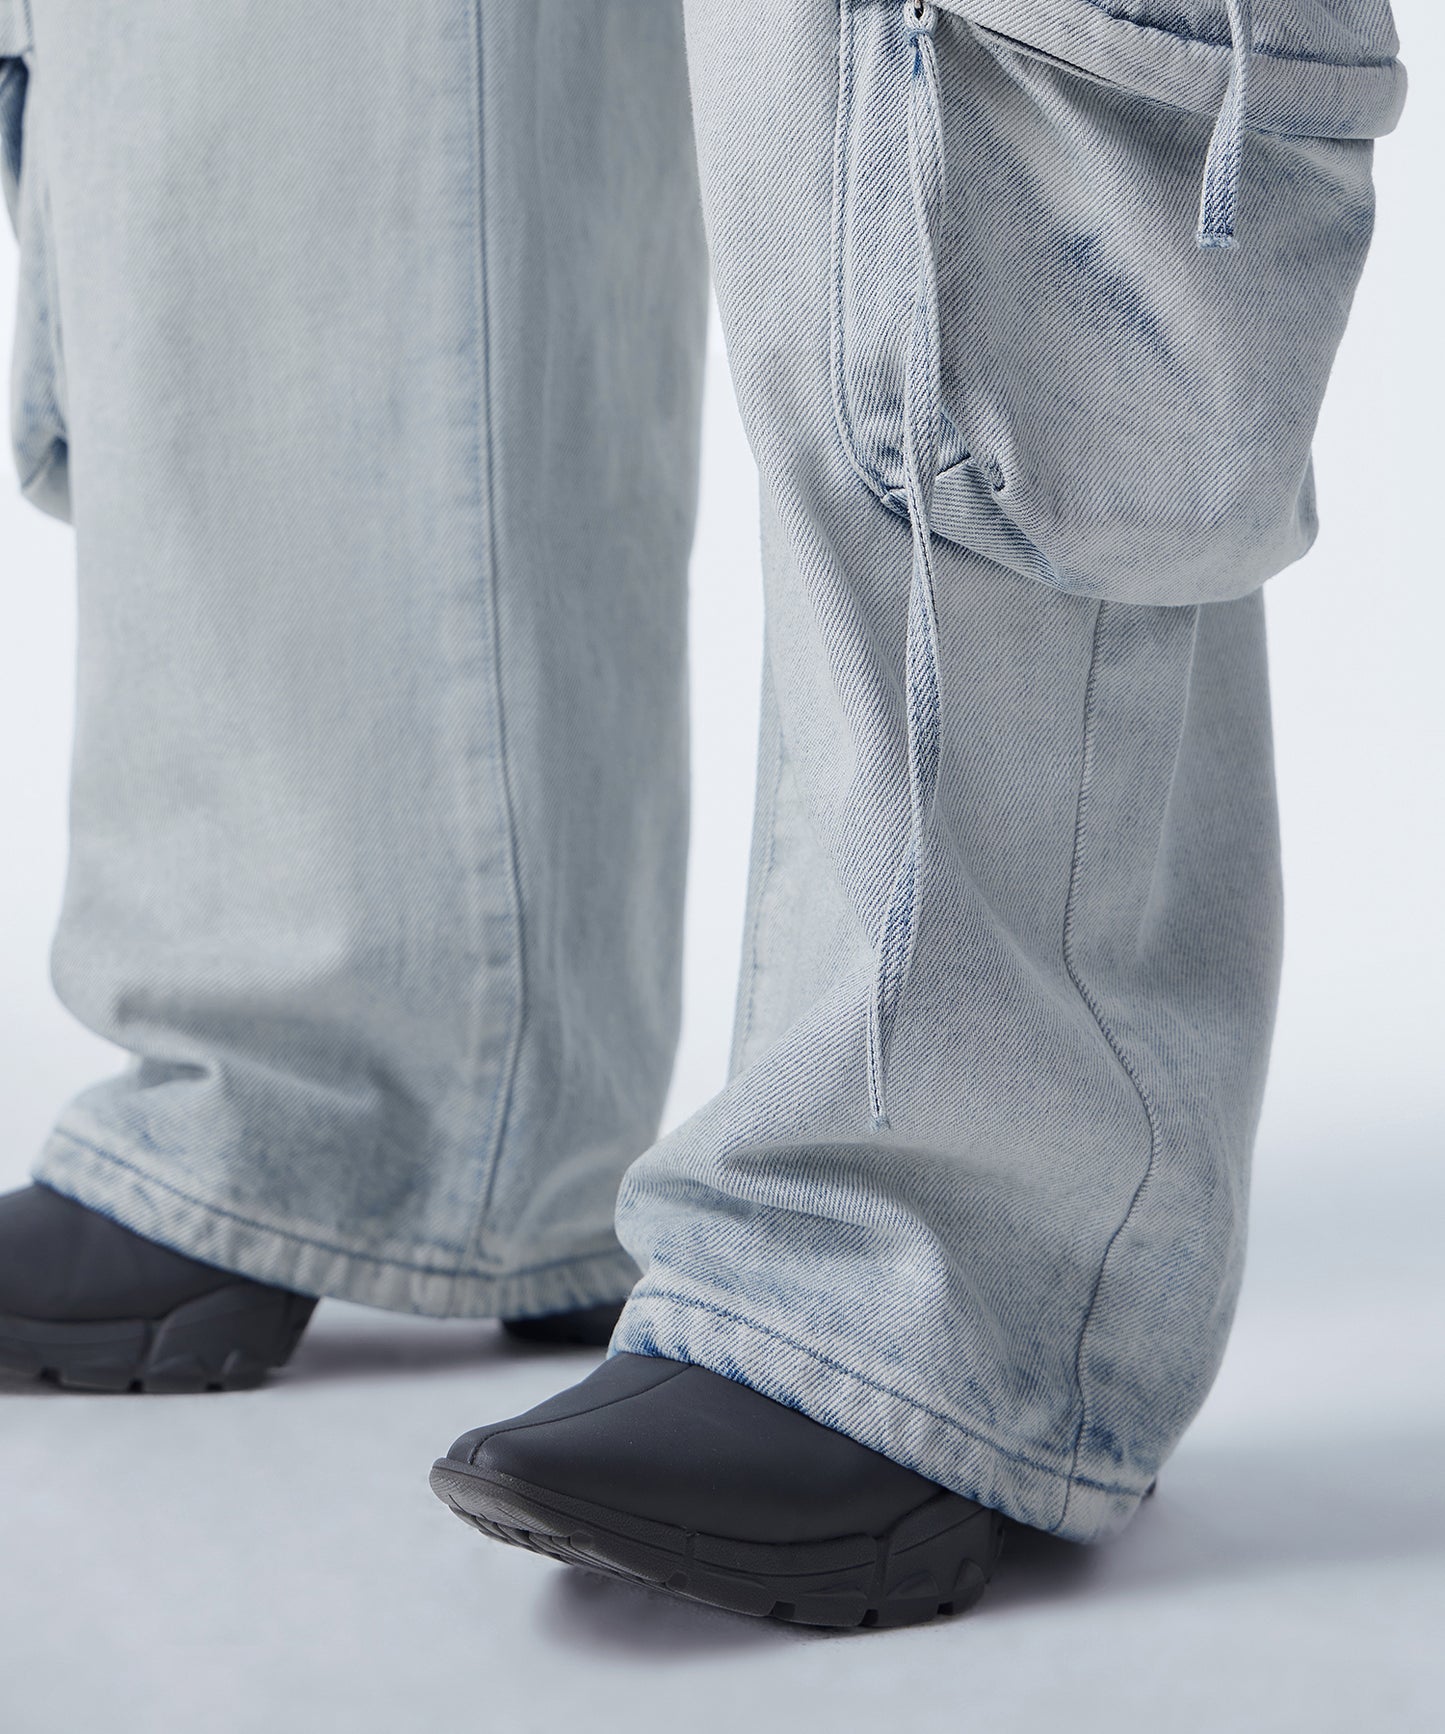 Workwear Large Pocket Jeans